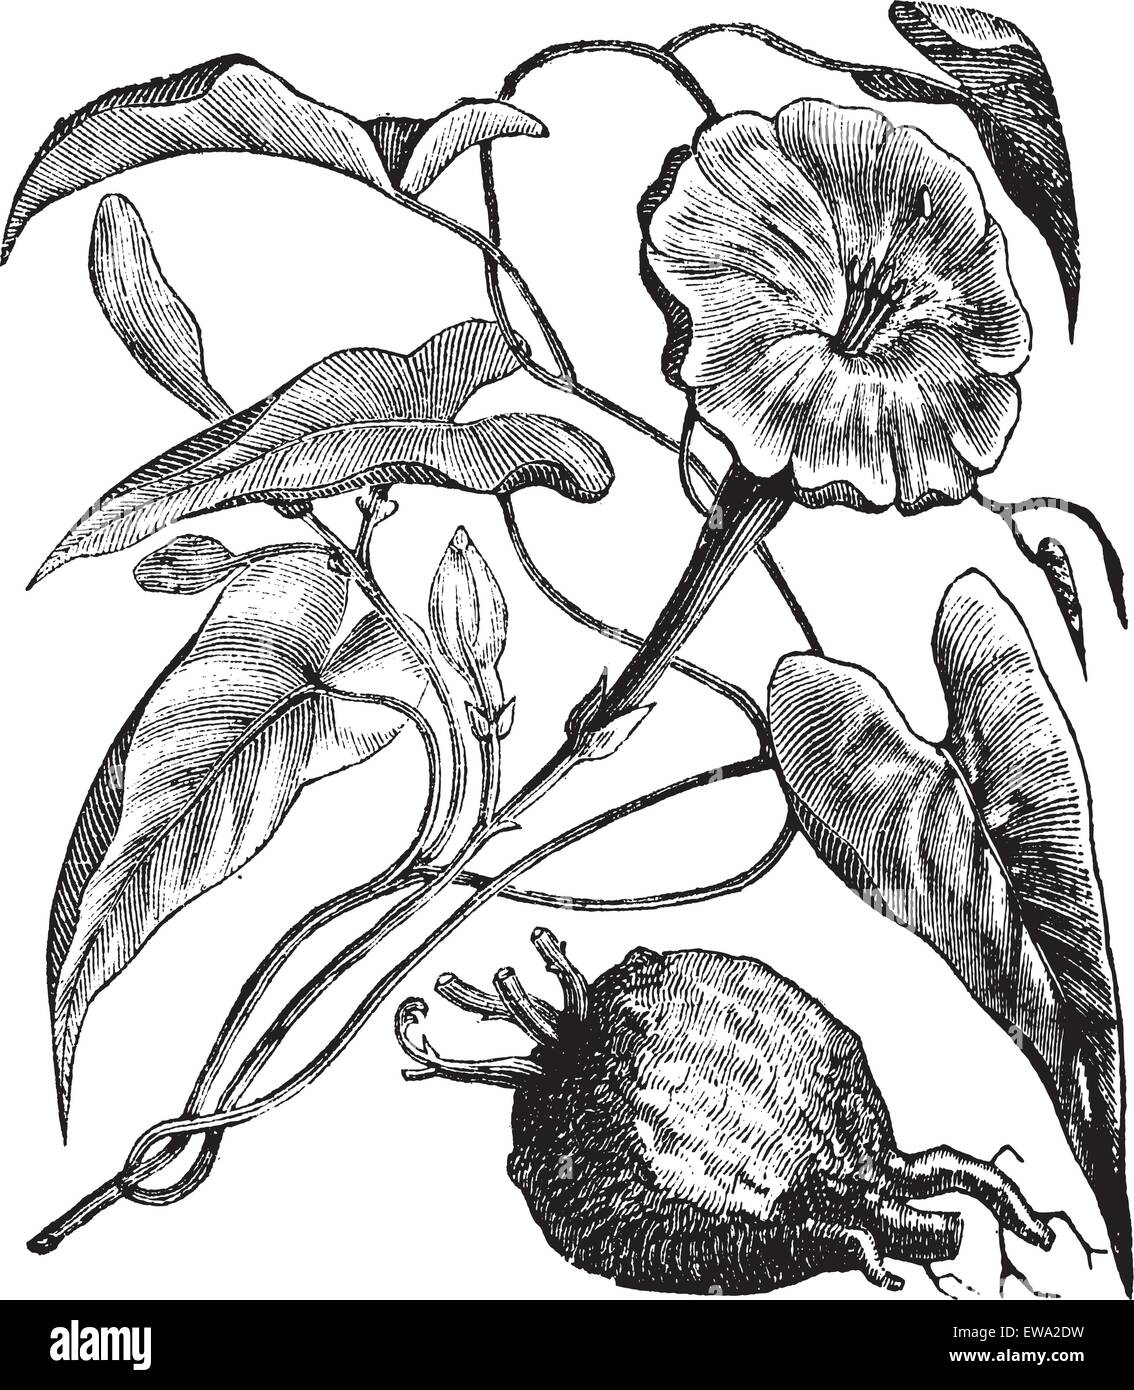 Purga Exogonium o Ipomoea jalapa o Ipomoea o Jalap Centinodia o Jalapa, vintage incisione. Vecchie illustrazioni incise di Exogon Illustrazione Vettoriale